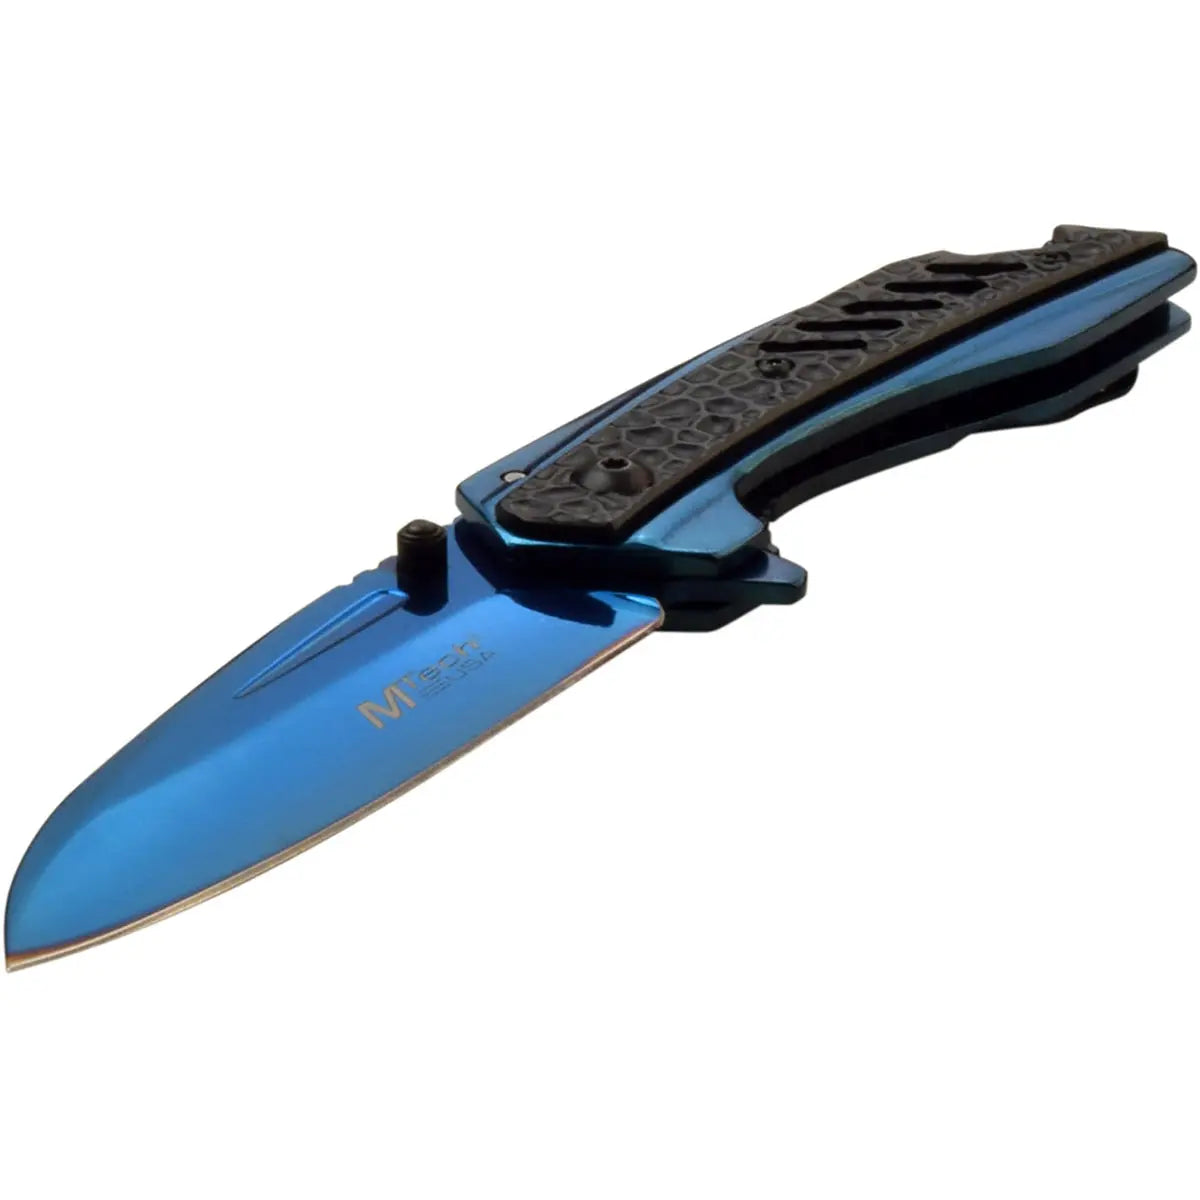 MTech USA Framelock Spring Assisted Folding Knife, 3.25" Blade, Blue, MT-A1133BL M-Tech